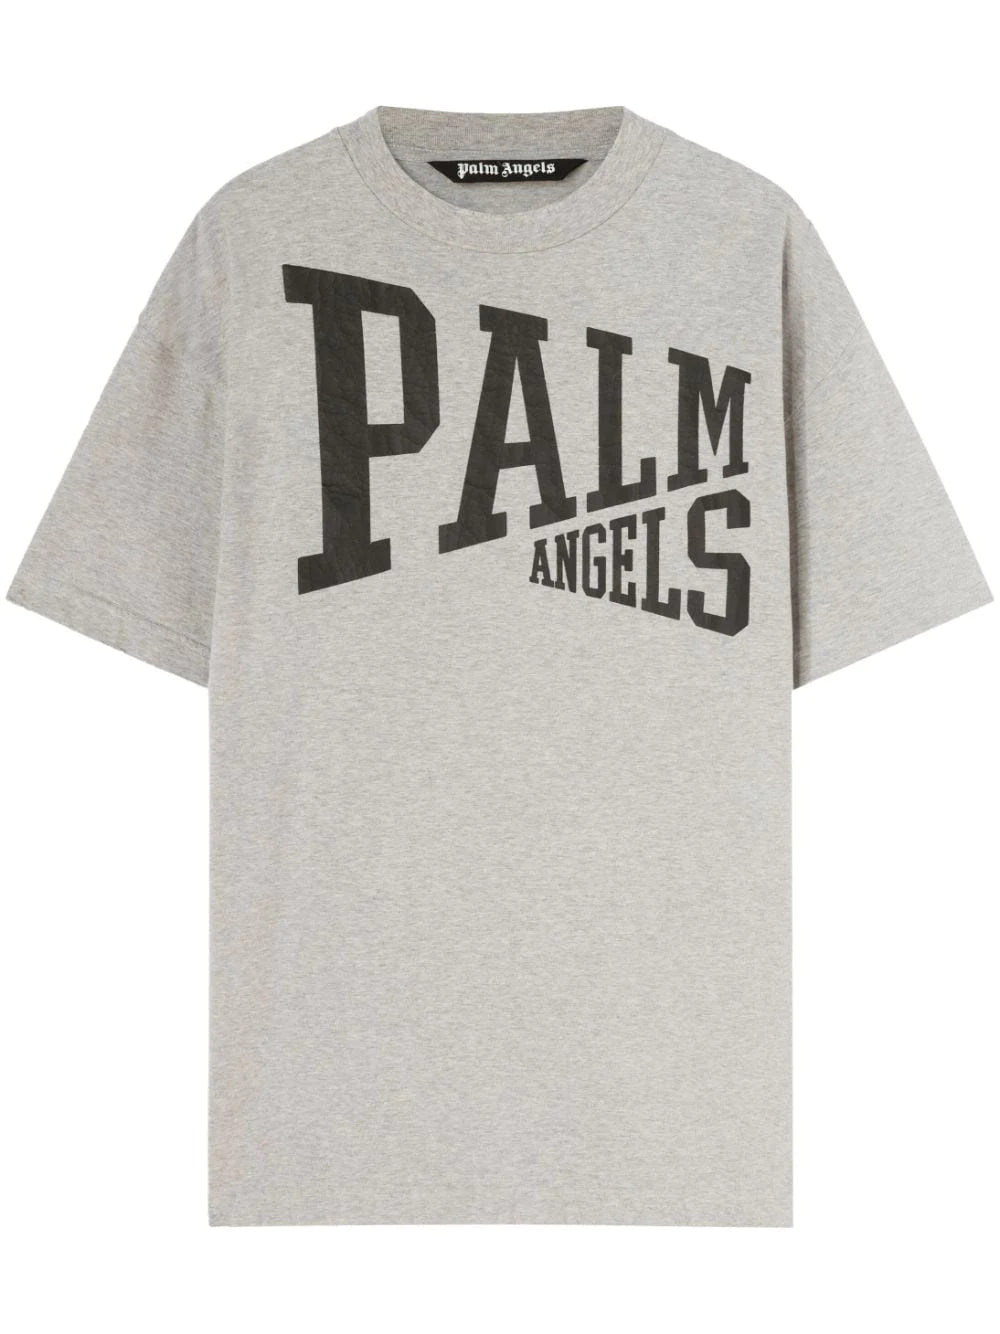 PALM ANGELS
T-shirt grigia